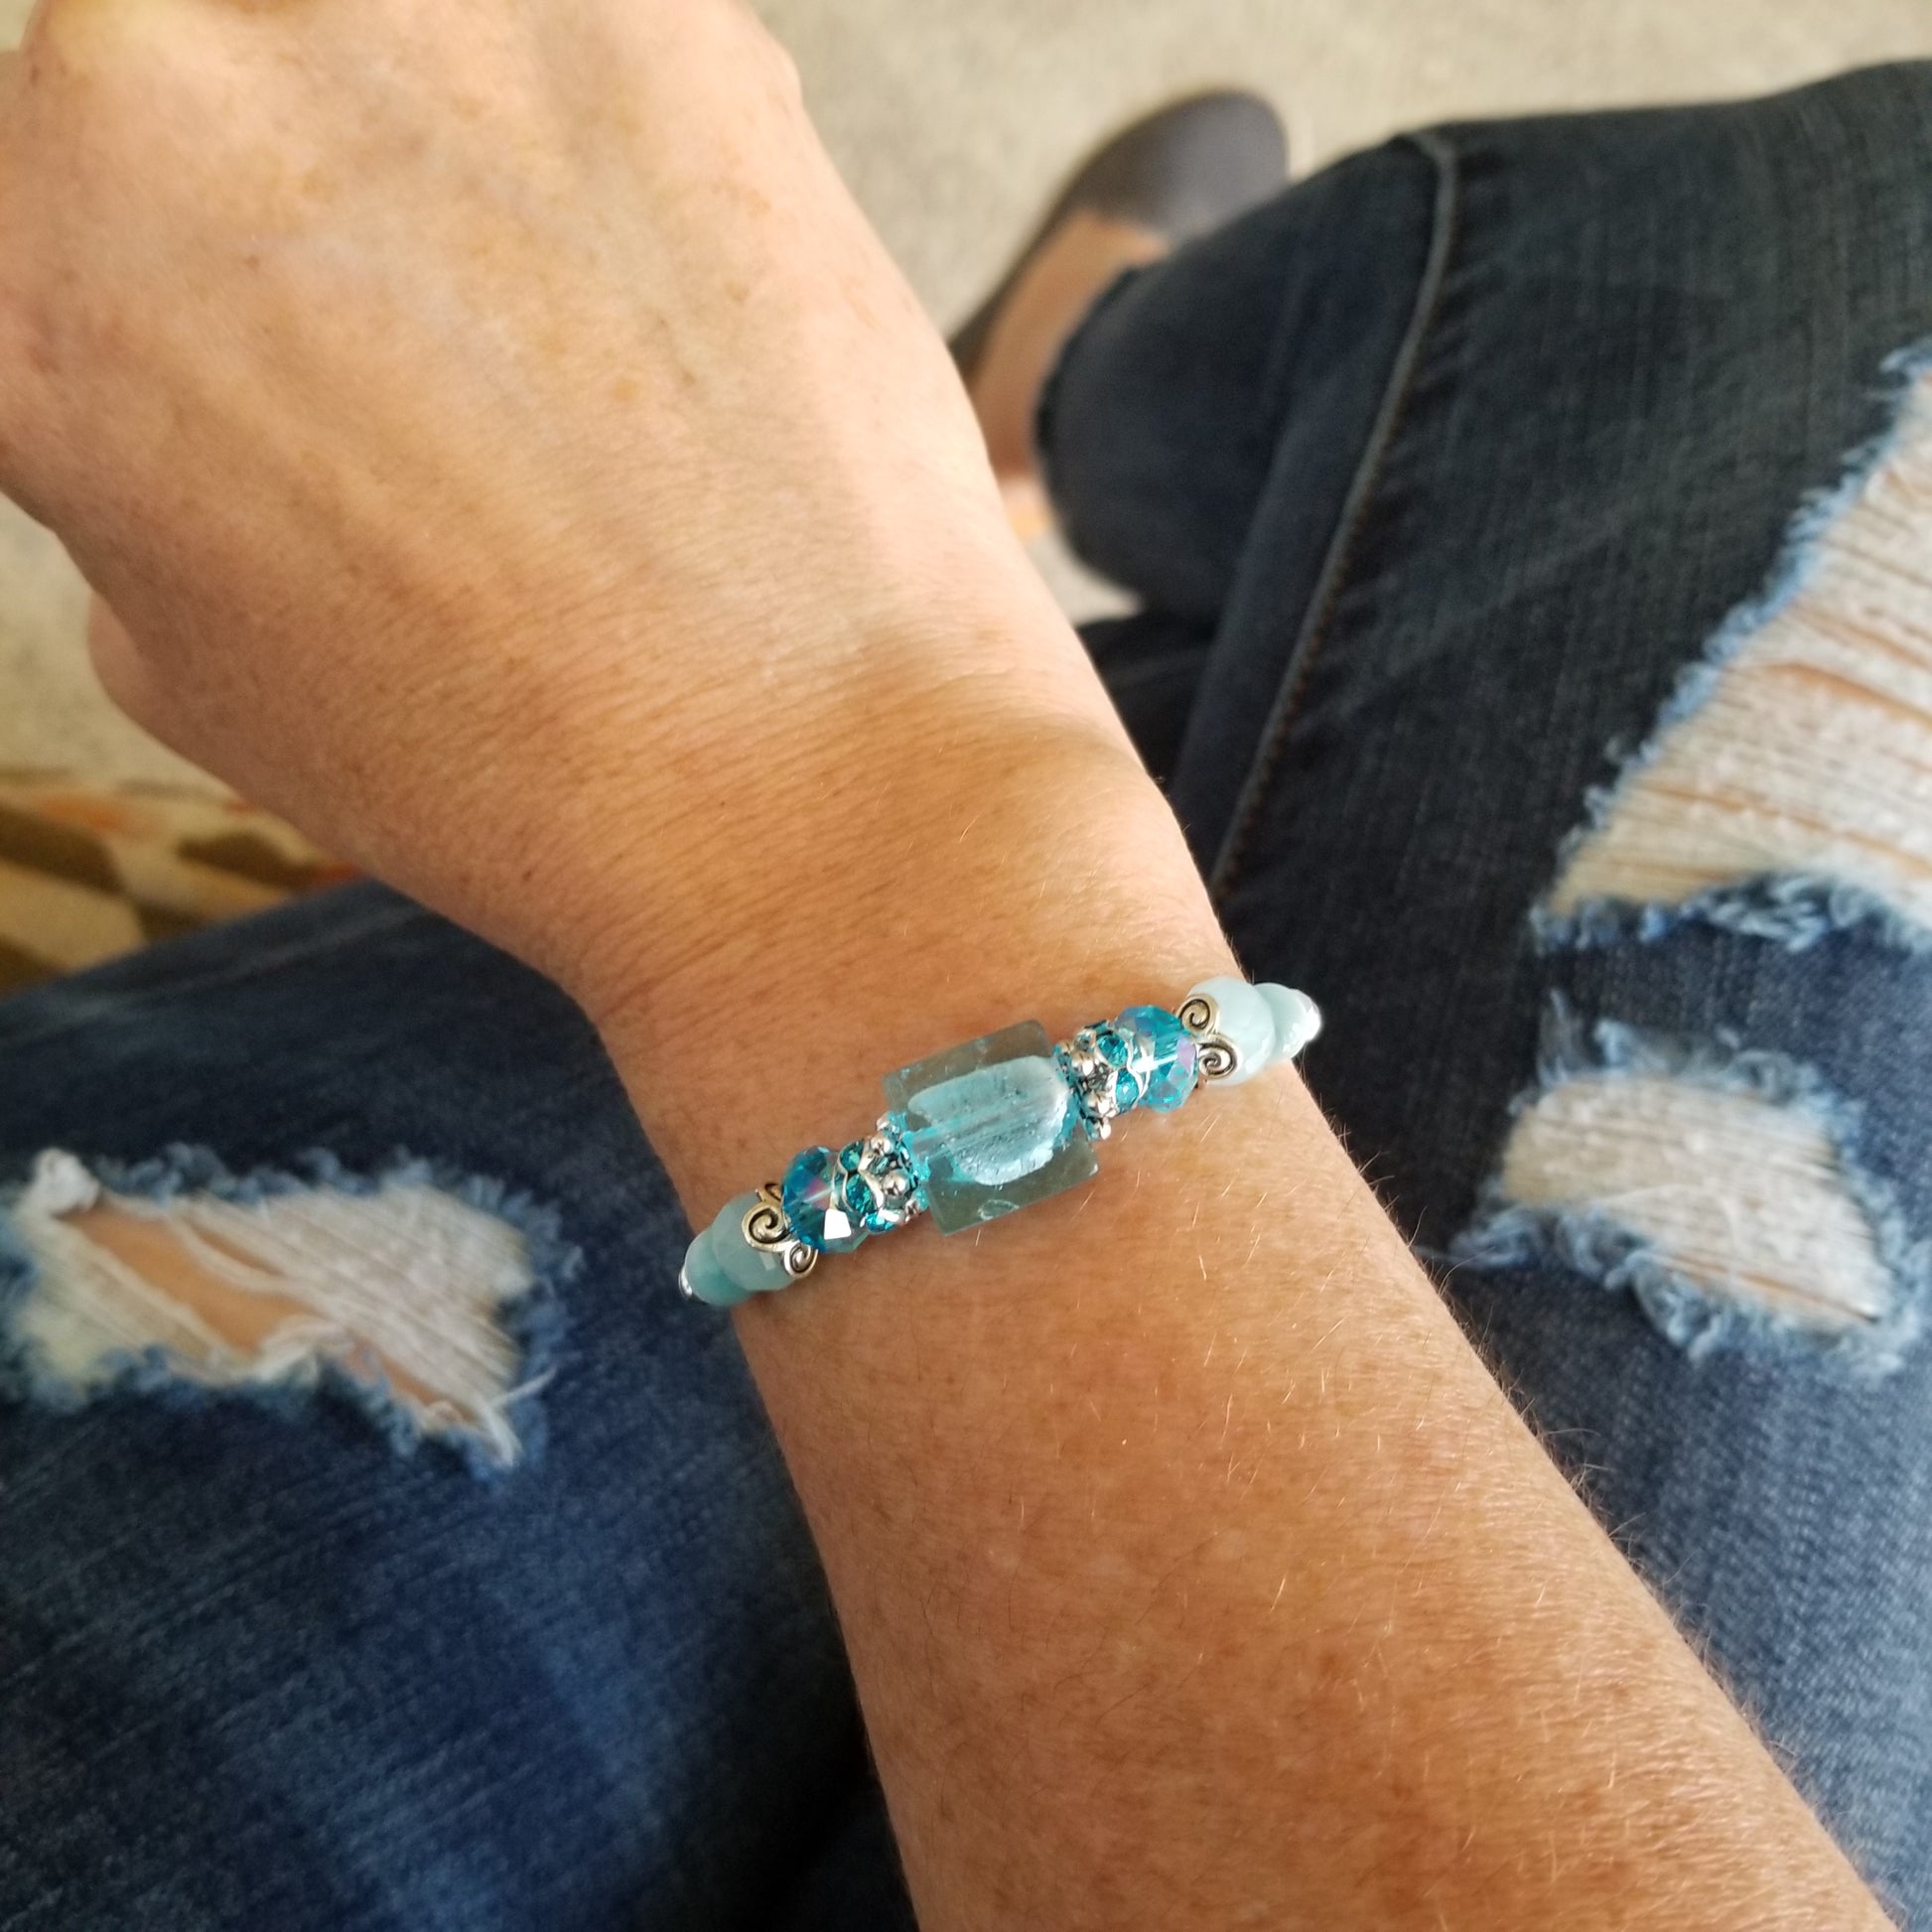 Aqua colored glass beads wrap bracelet on wrist